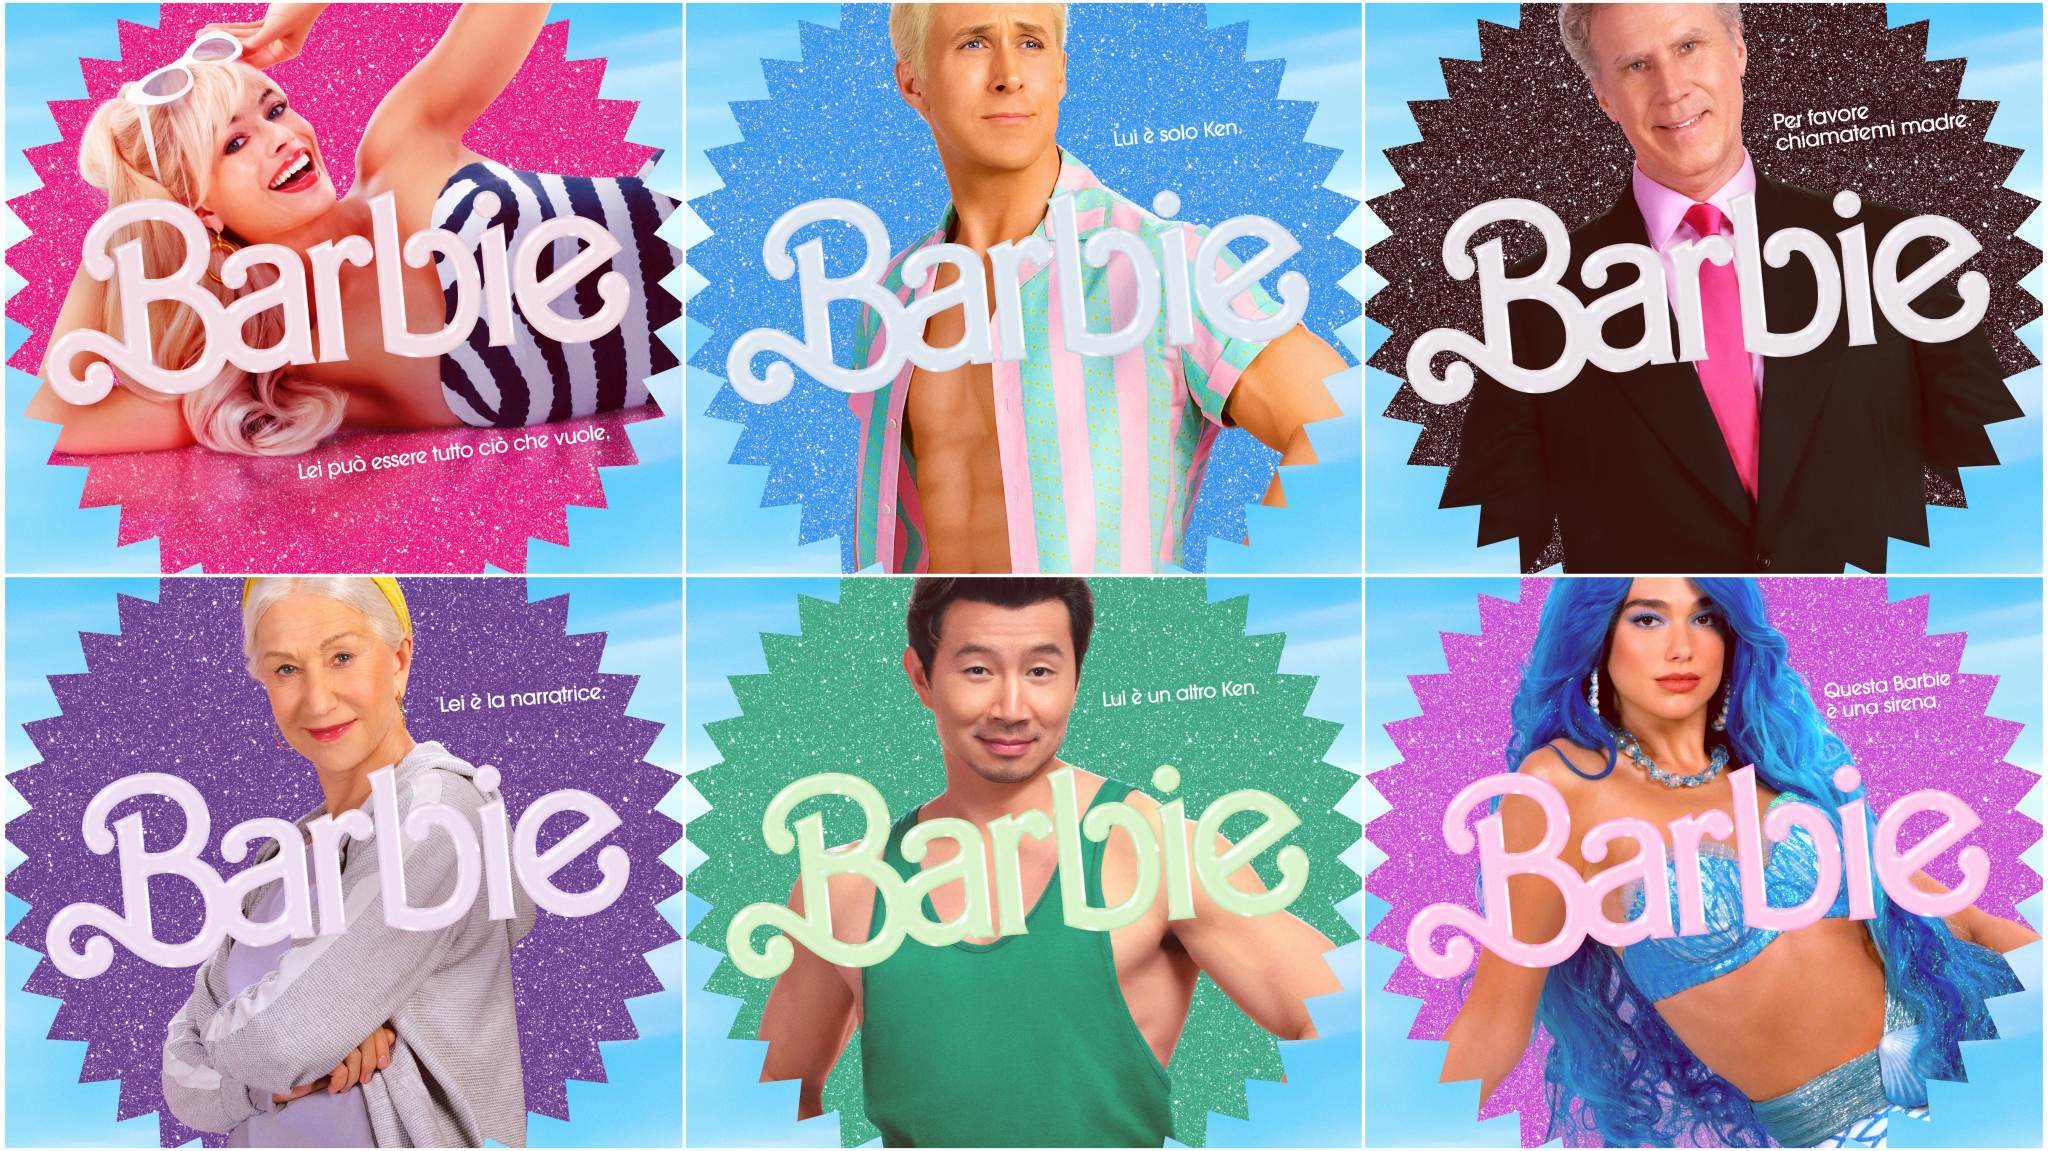 Barbie: i 24 character poster svelano la data di uscita italiana